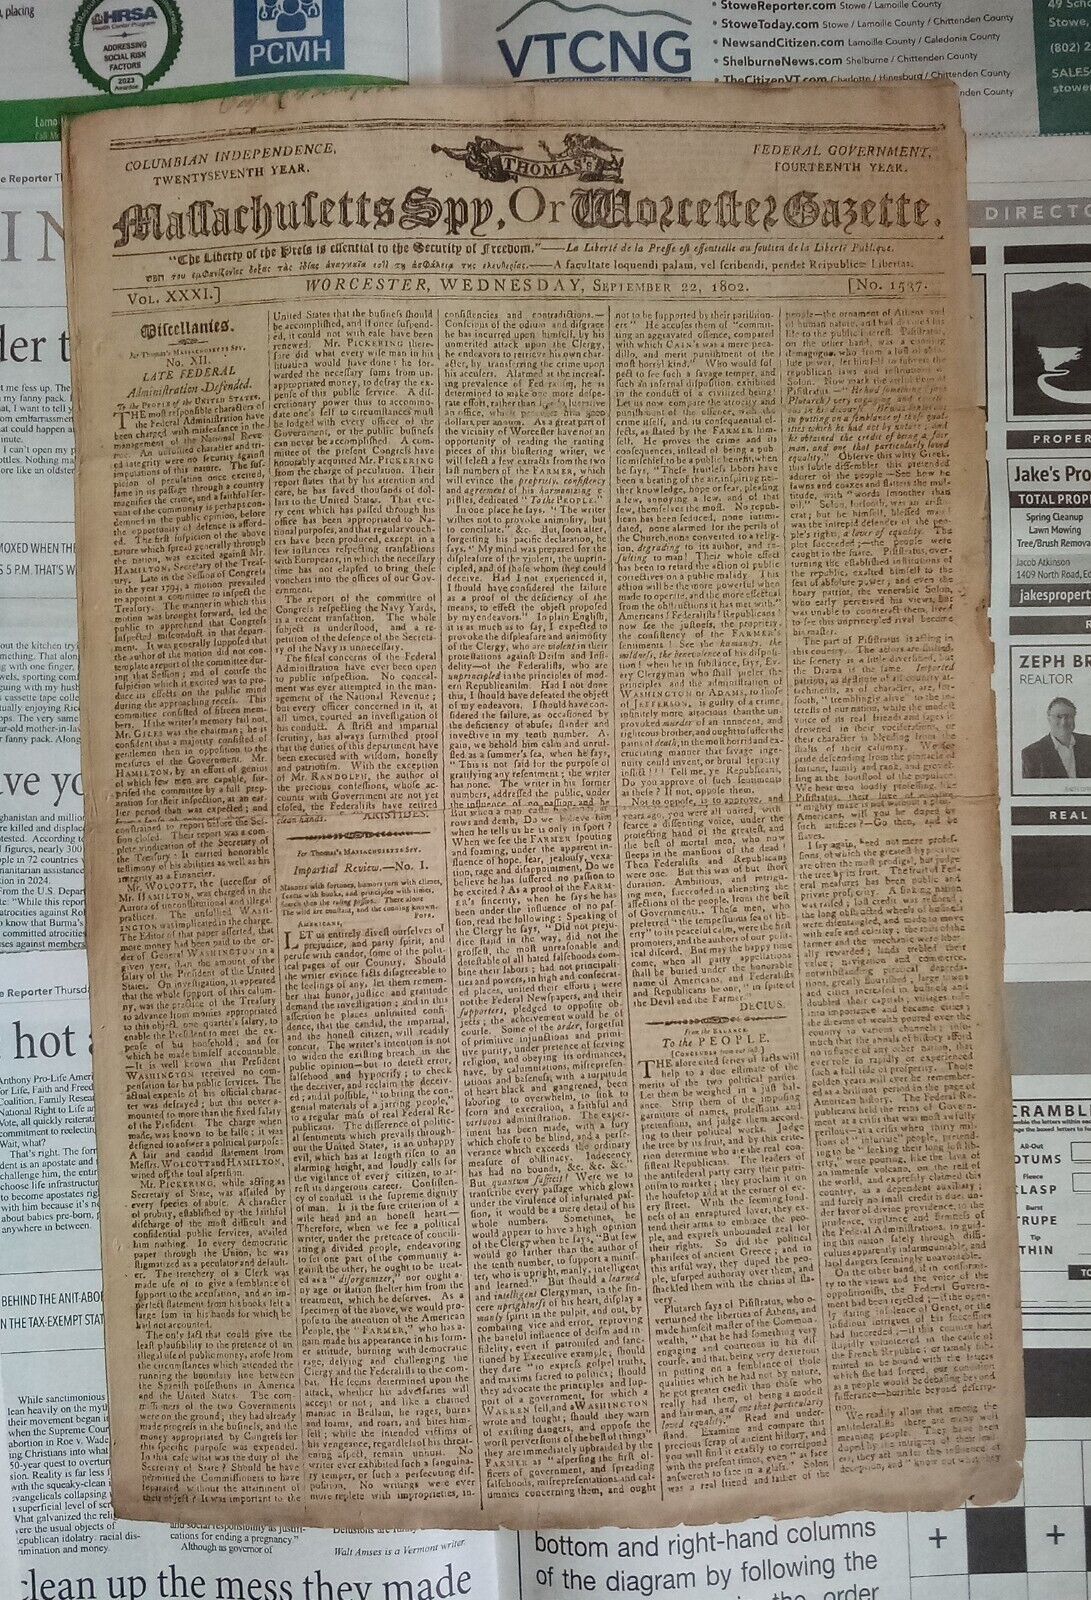 Massachusetts Spy, or Worcester Gazette - Wed Sept 22 1802 - Newspaper